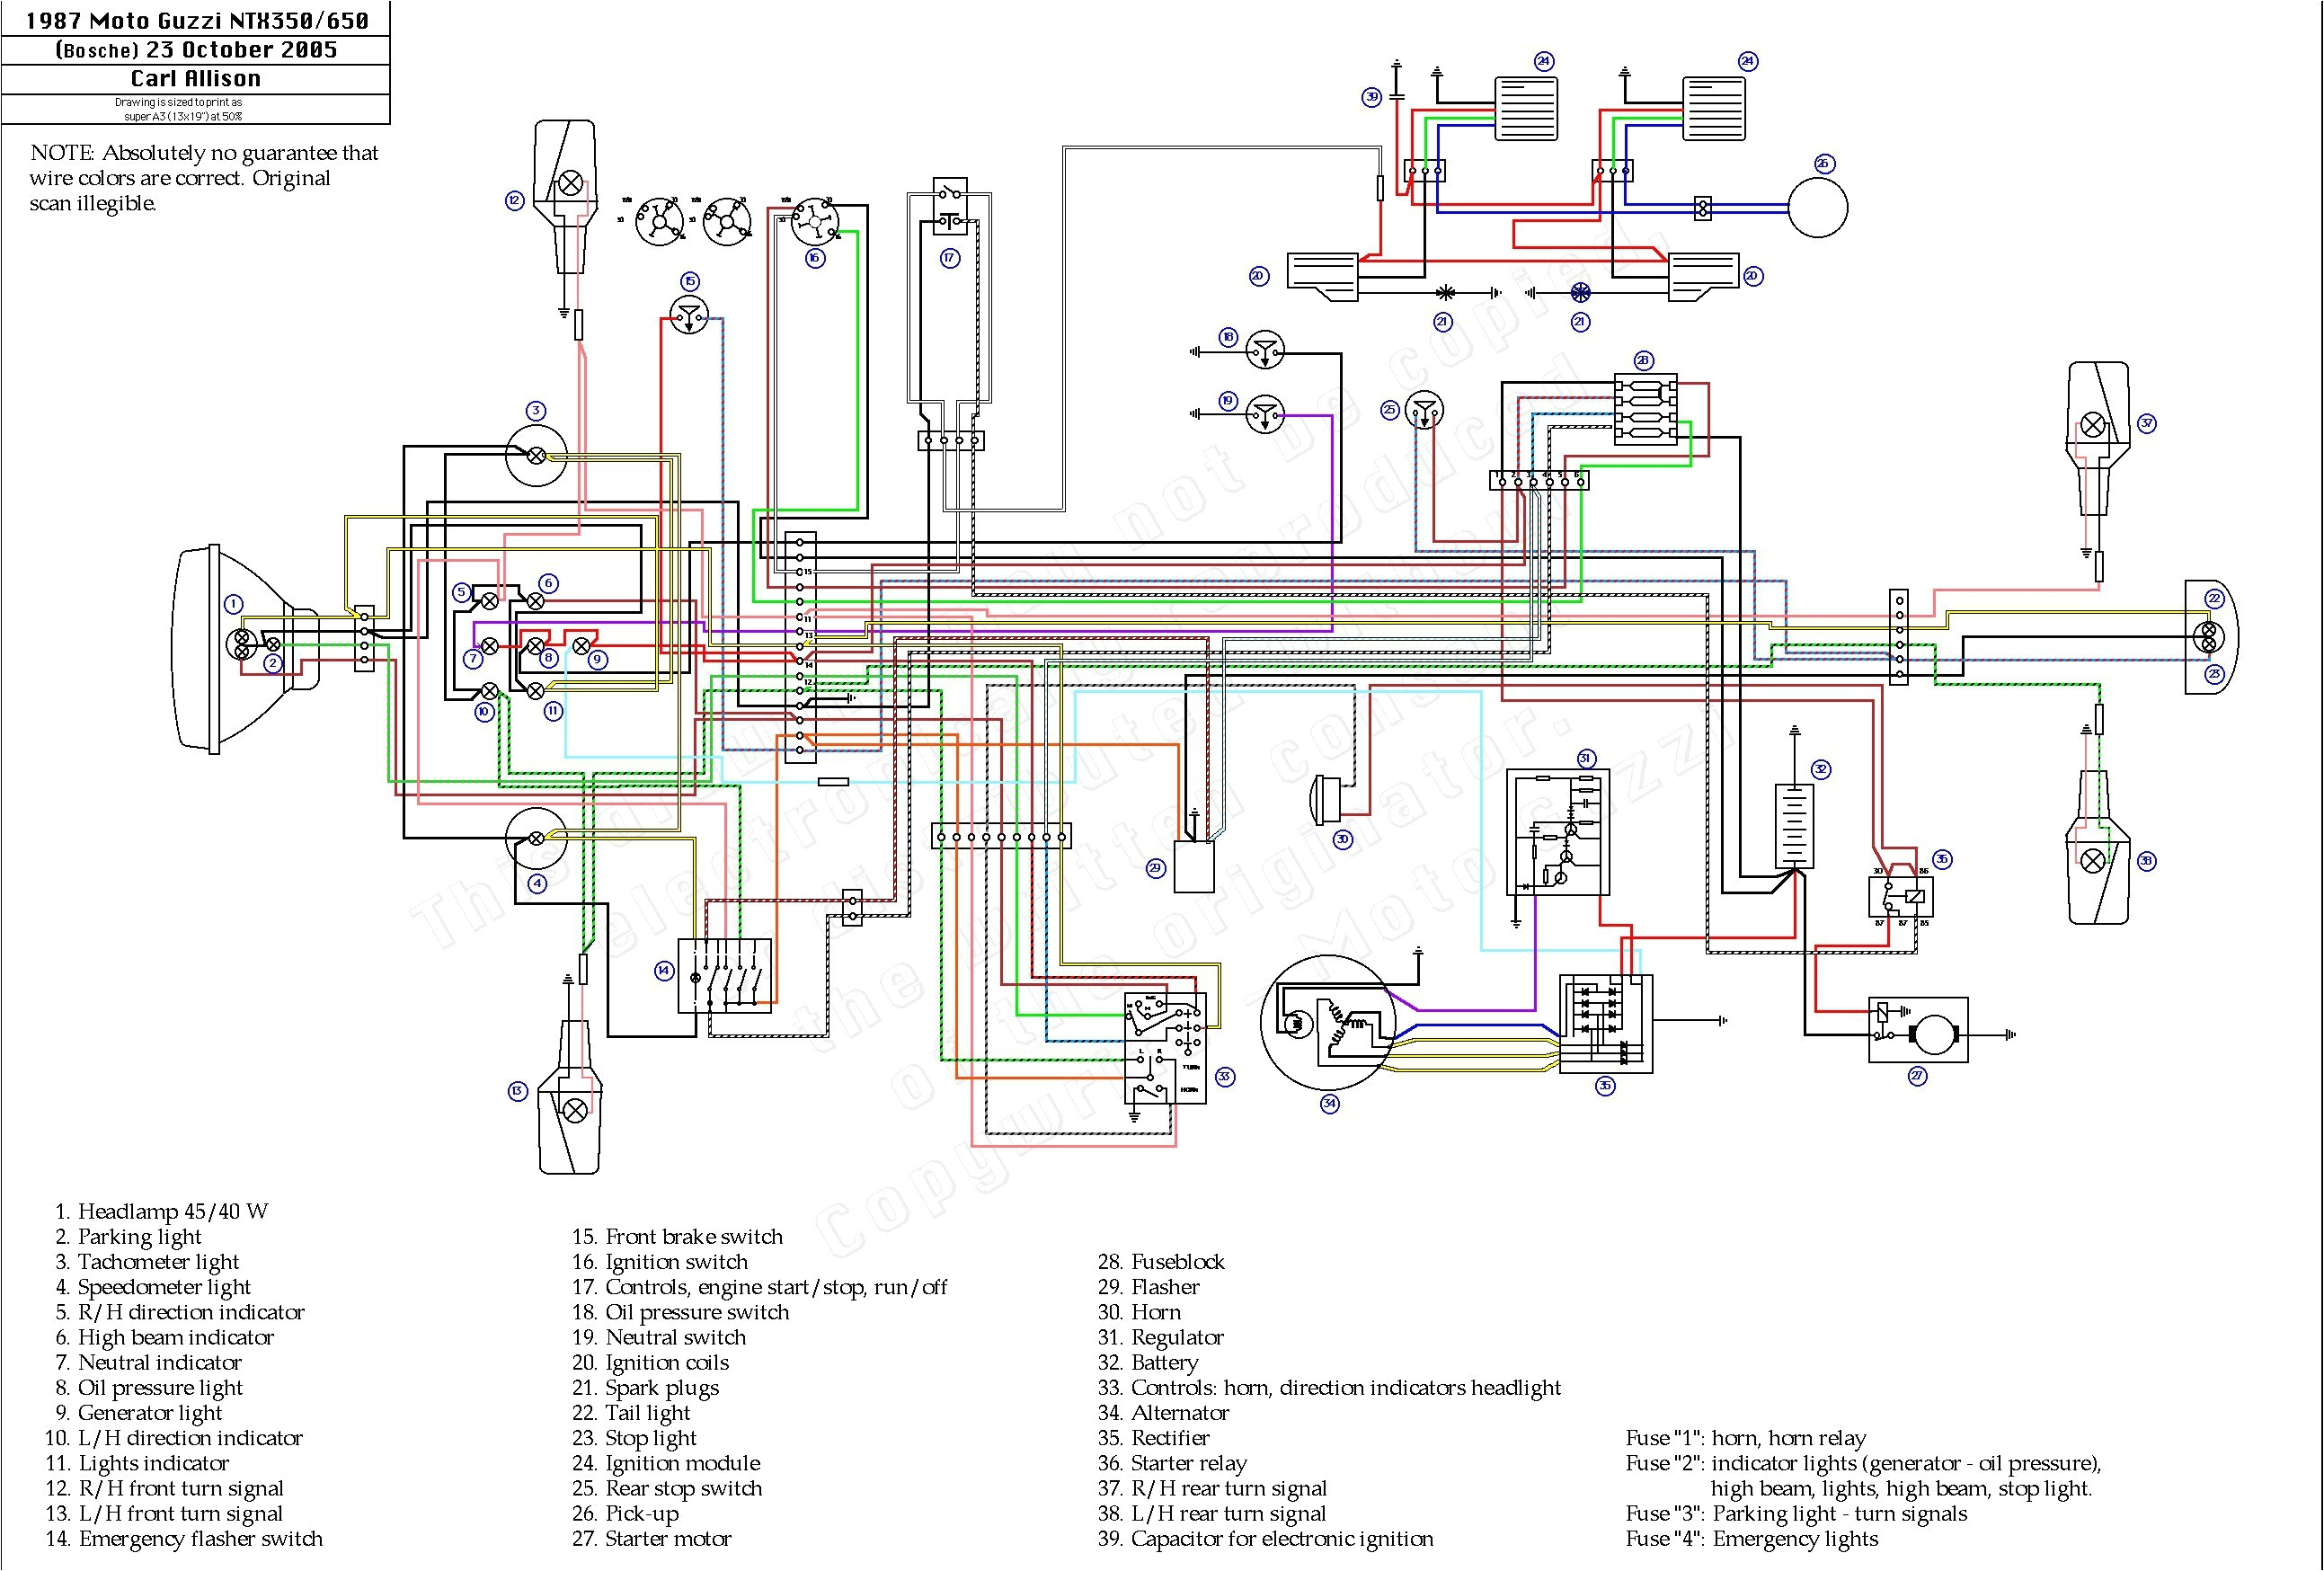 kazuma 124 cm3 wiring diagram wiring diagram500 jaguar atv wiring diagram wiring diagram50cc atv engine diagram